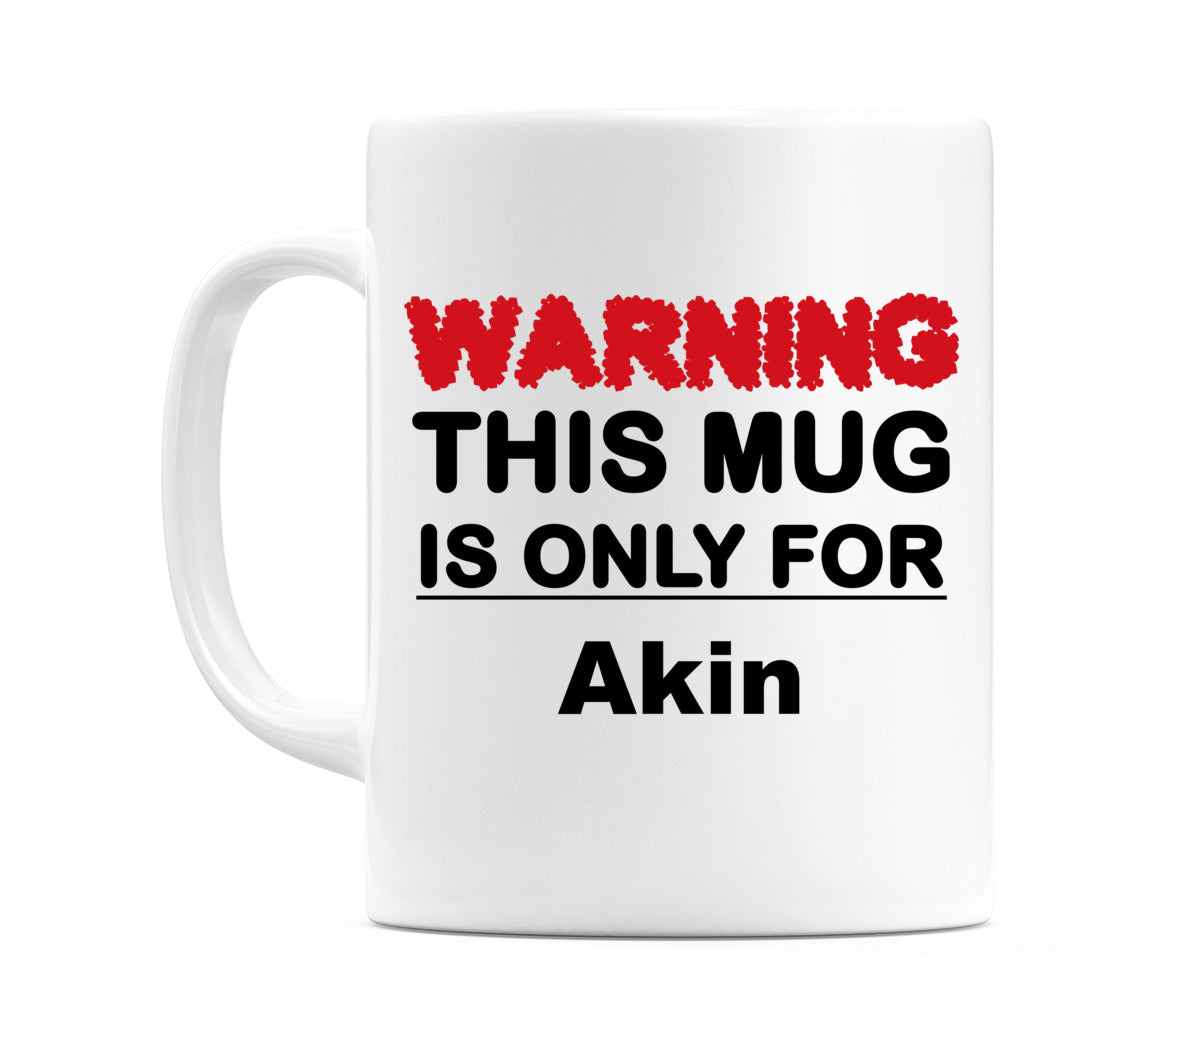 Warning This Mug is ONLY for Akin Mug